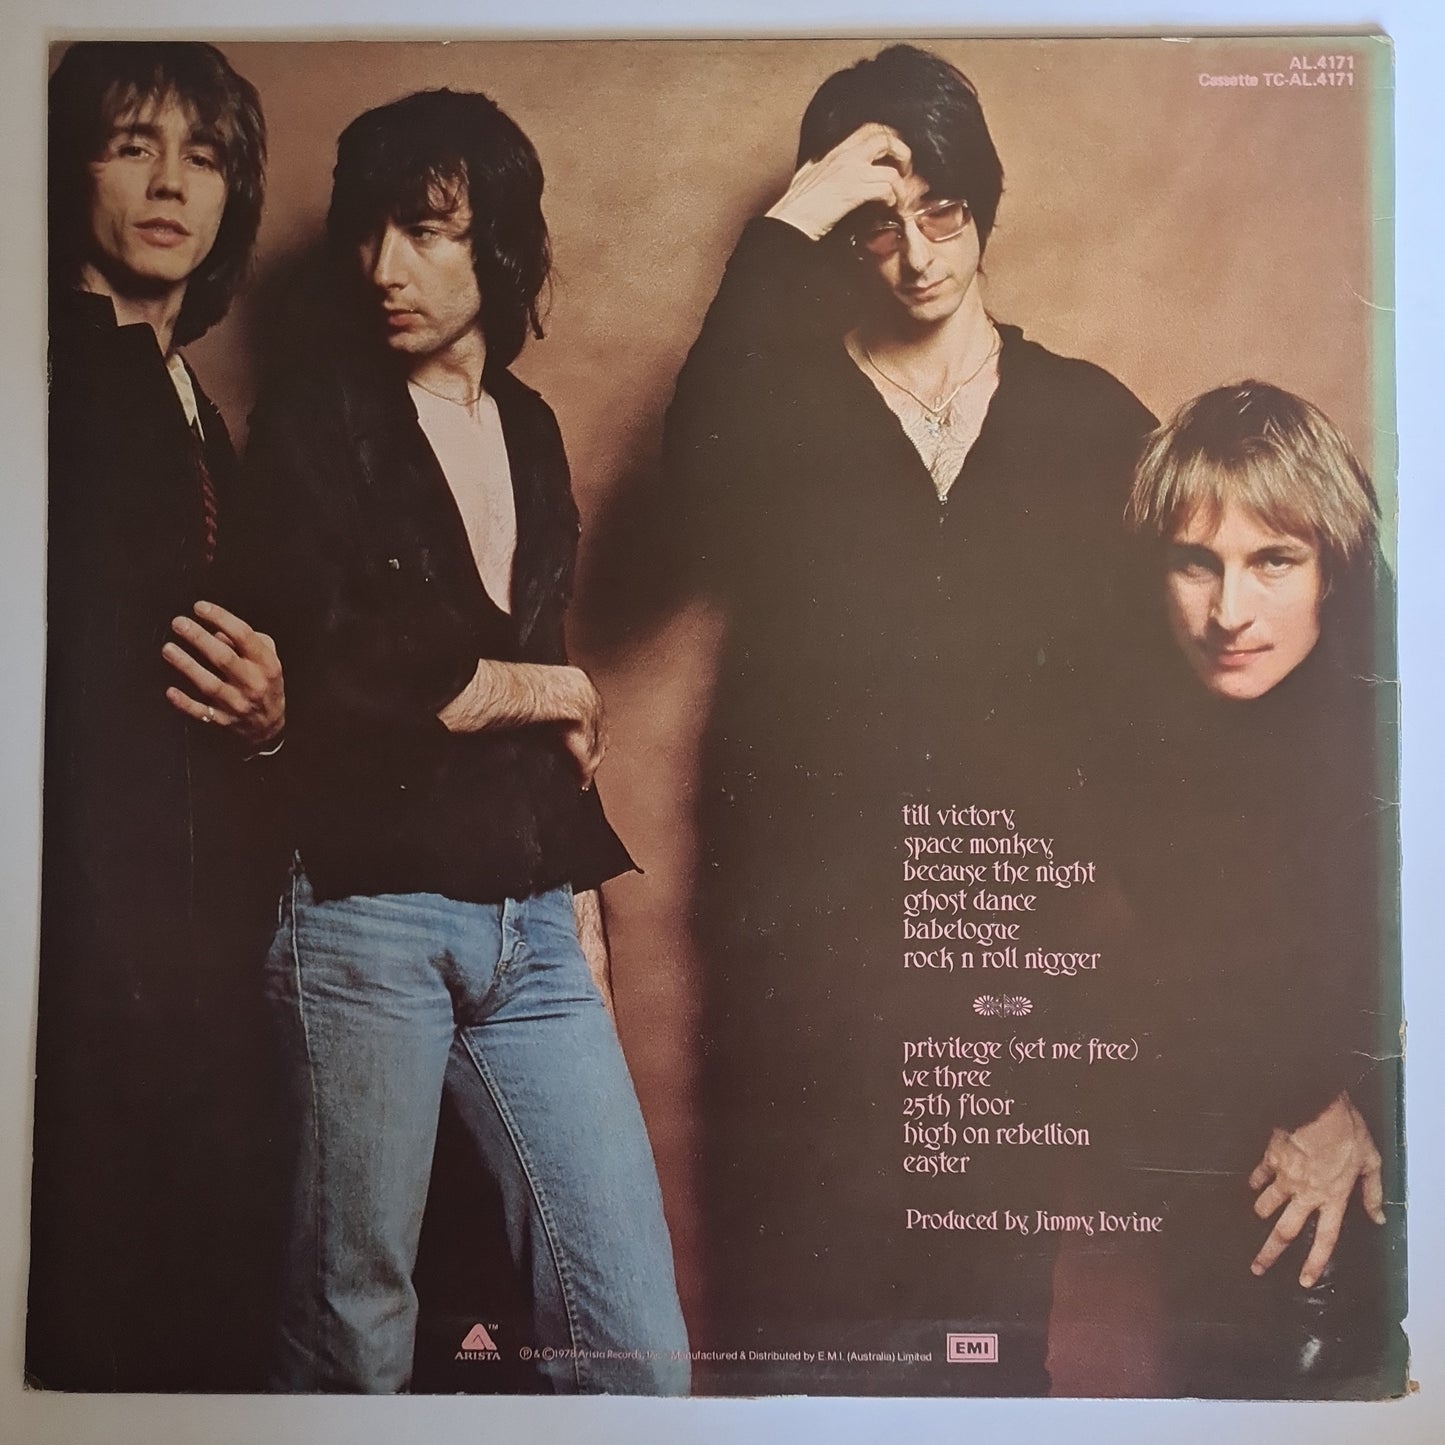 Patti Smith Group – Easter - 1978 - Vinyl Record